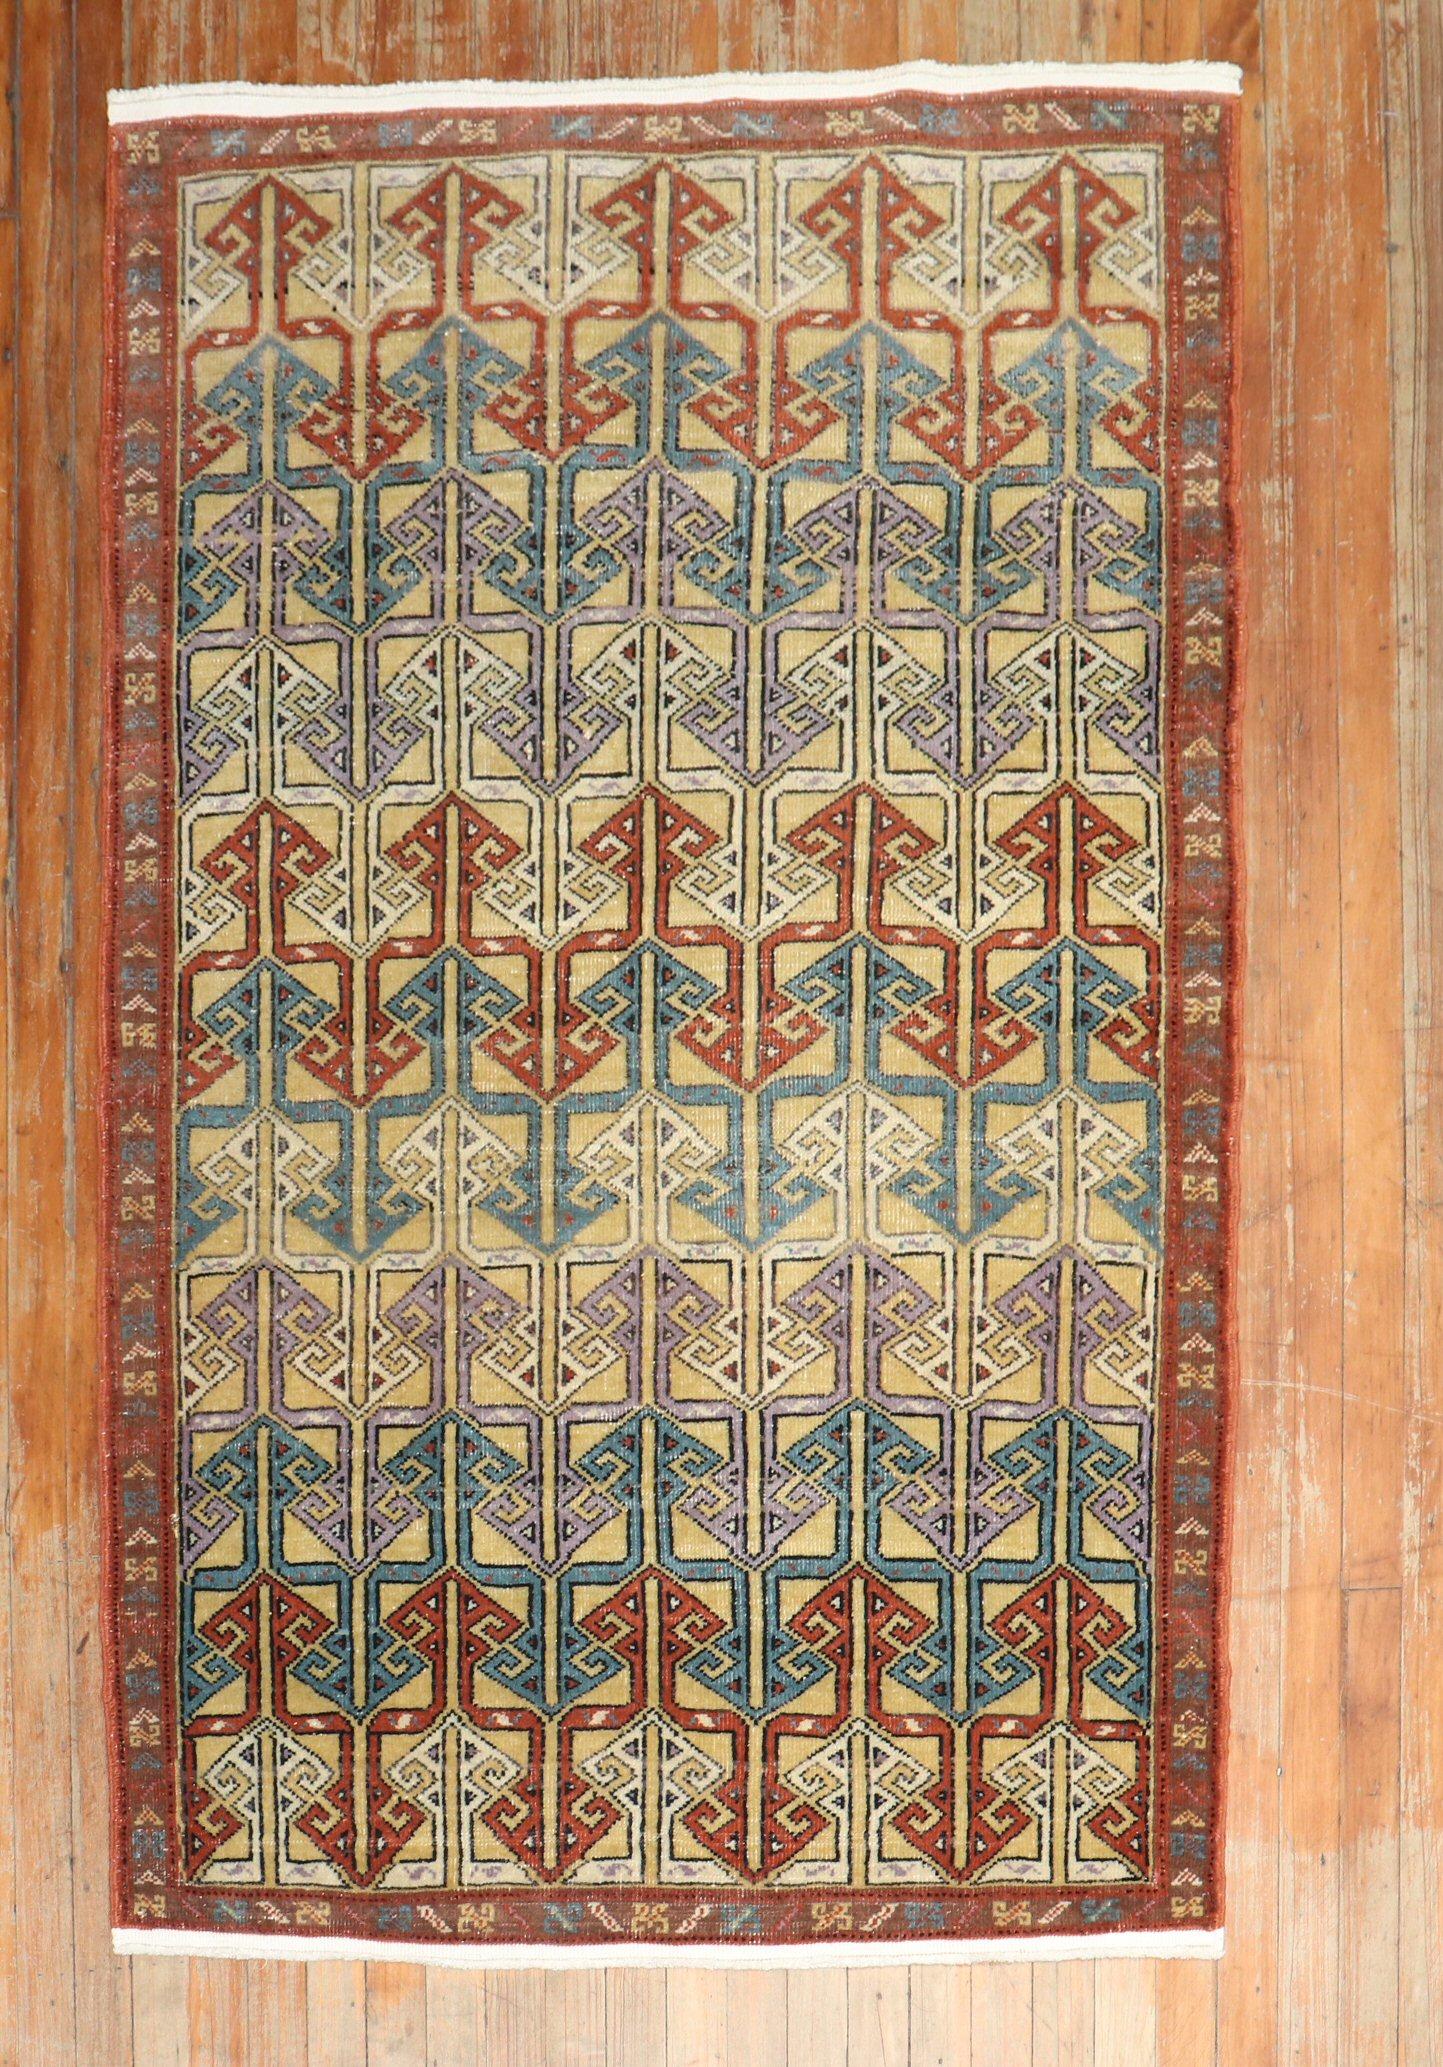 Mid-20th-century Turkish Anatolian scatter size Rug

Size: 3'7'' x 5'7''